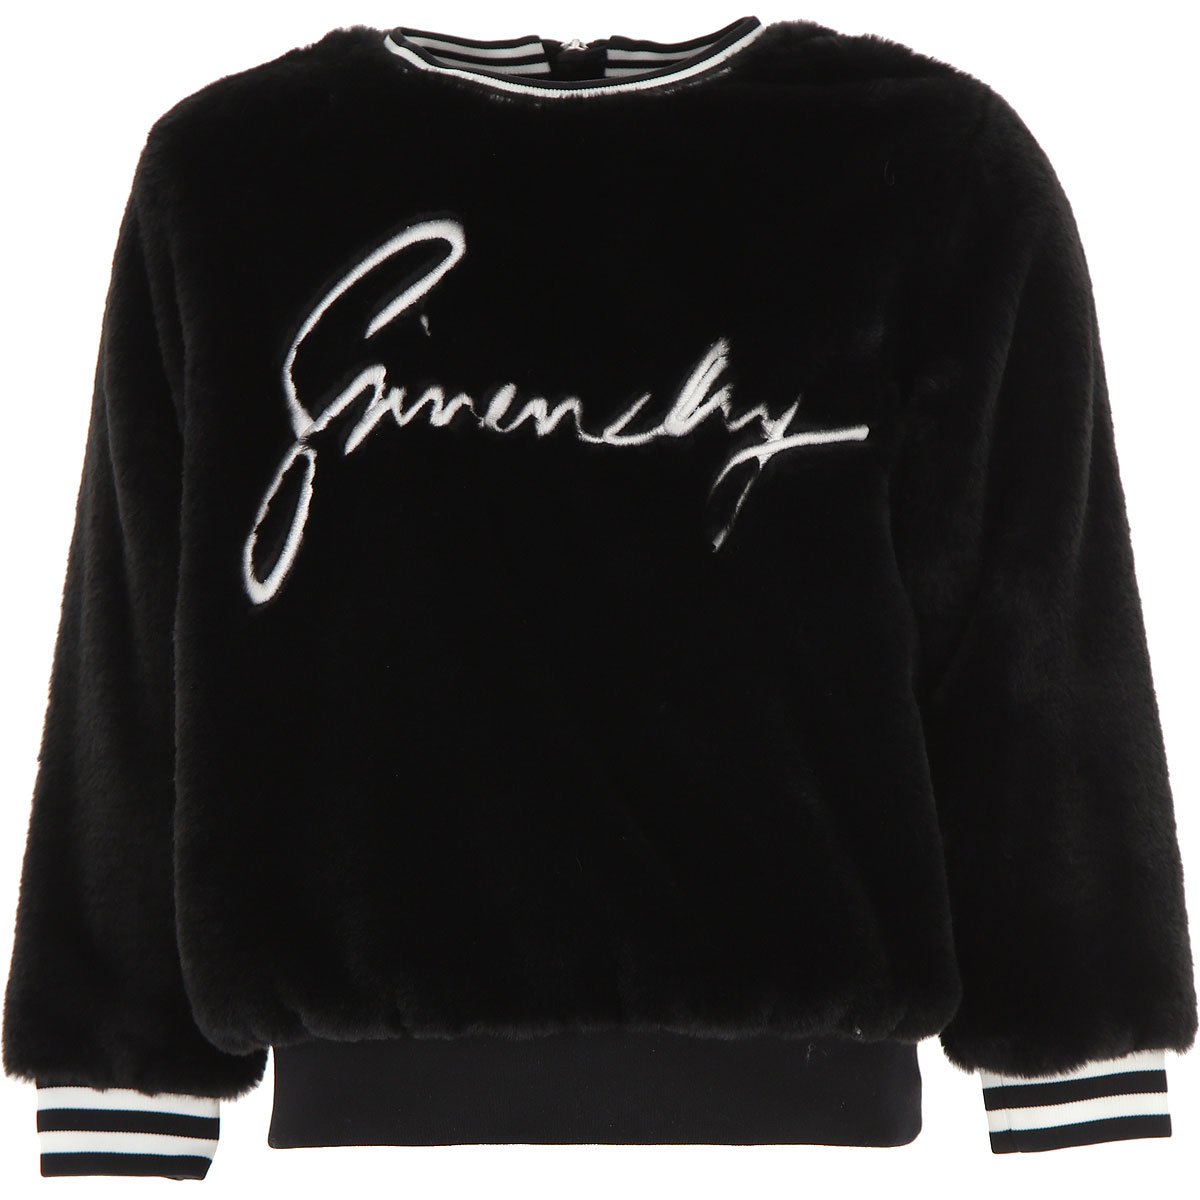 Givenchy Kinder Sweatshirt & Kapuzenpullover für Mädchen Günstig im Sale, Schwarz, Polyester, 2017, 10Y 12Y 5Y 6Y 8Y